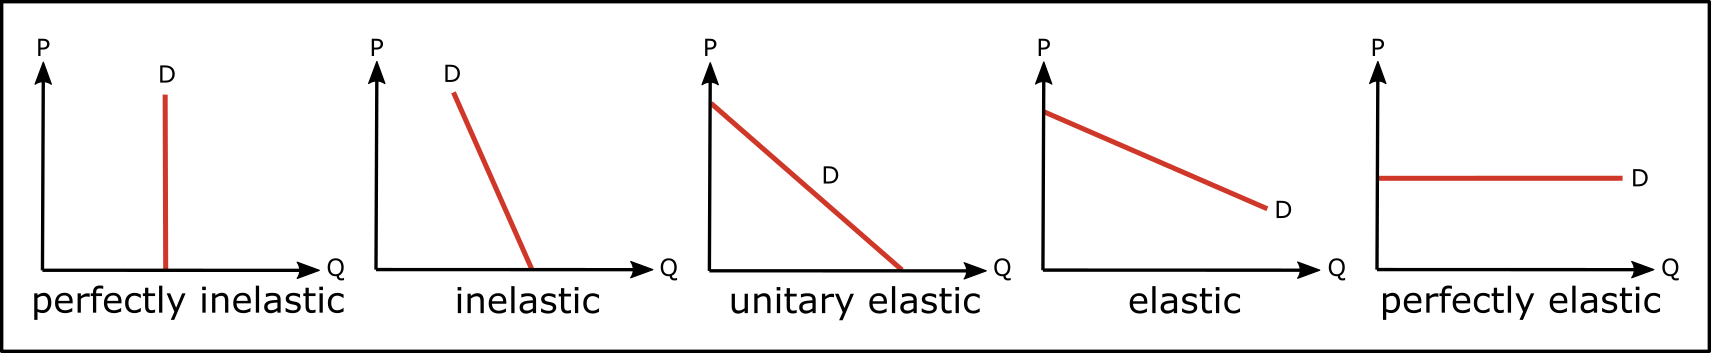 price elasticity of demand curves